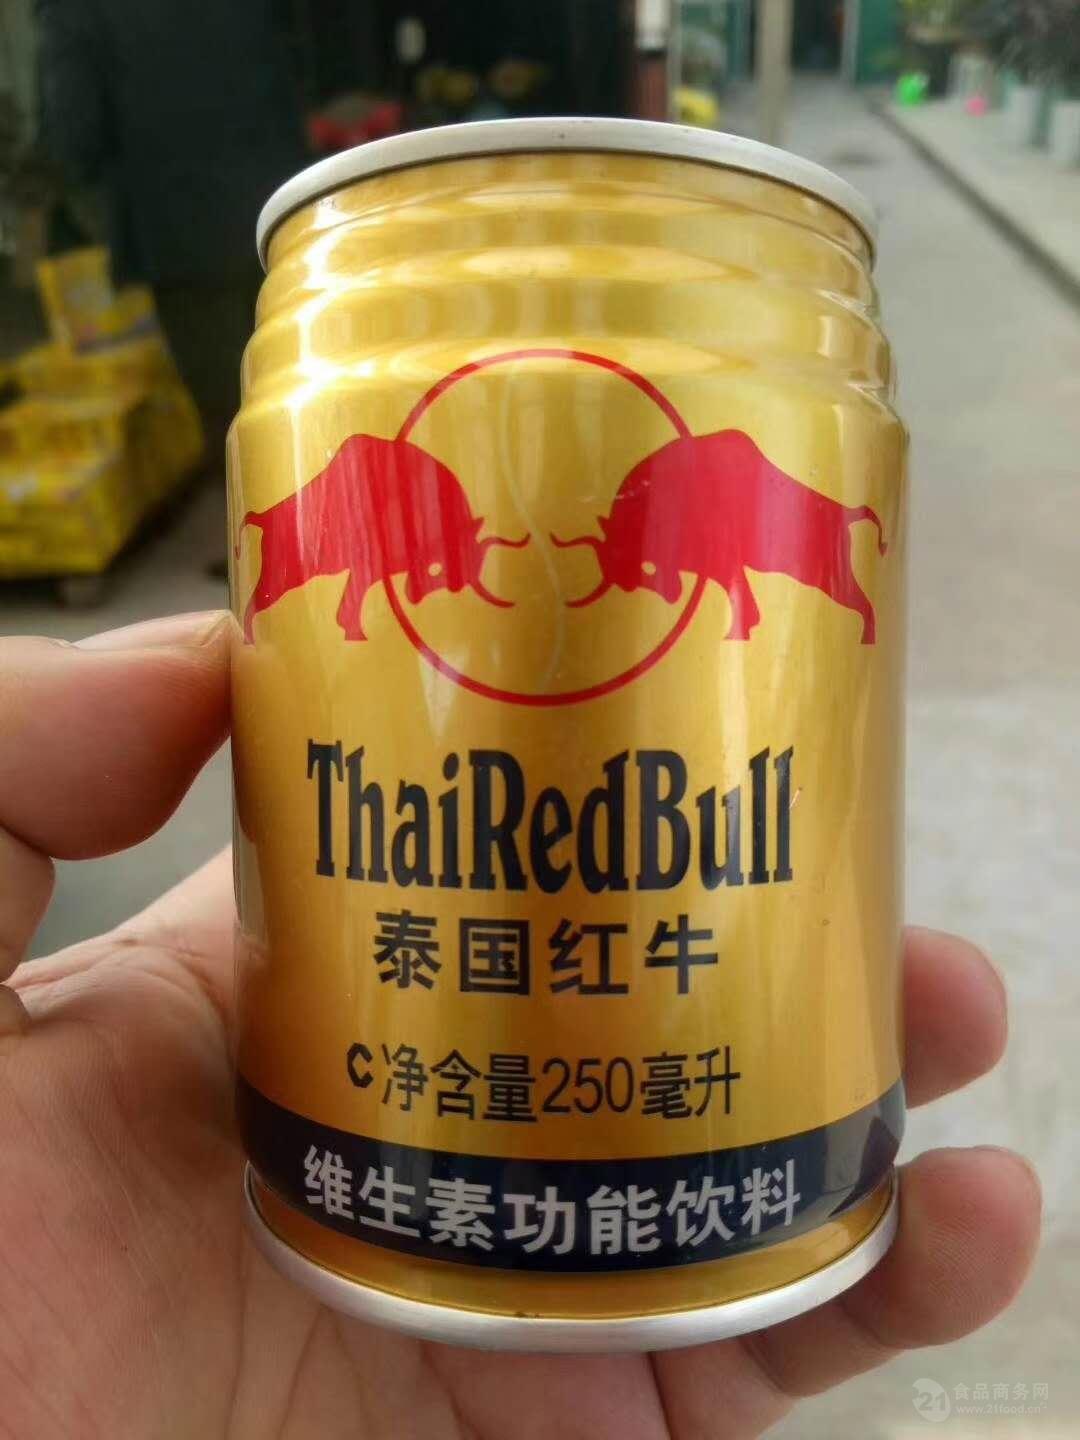 <b>“中国红牛被禁止生产销售”泰国天丝热搜第一</b>